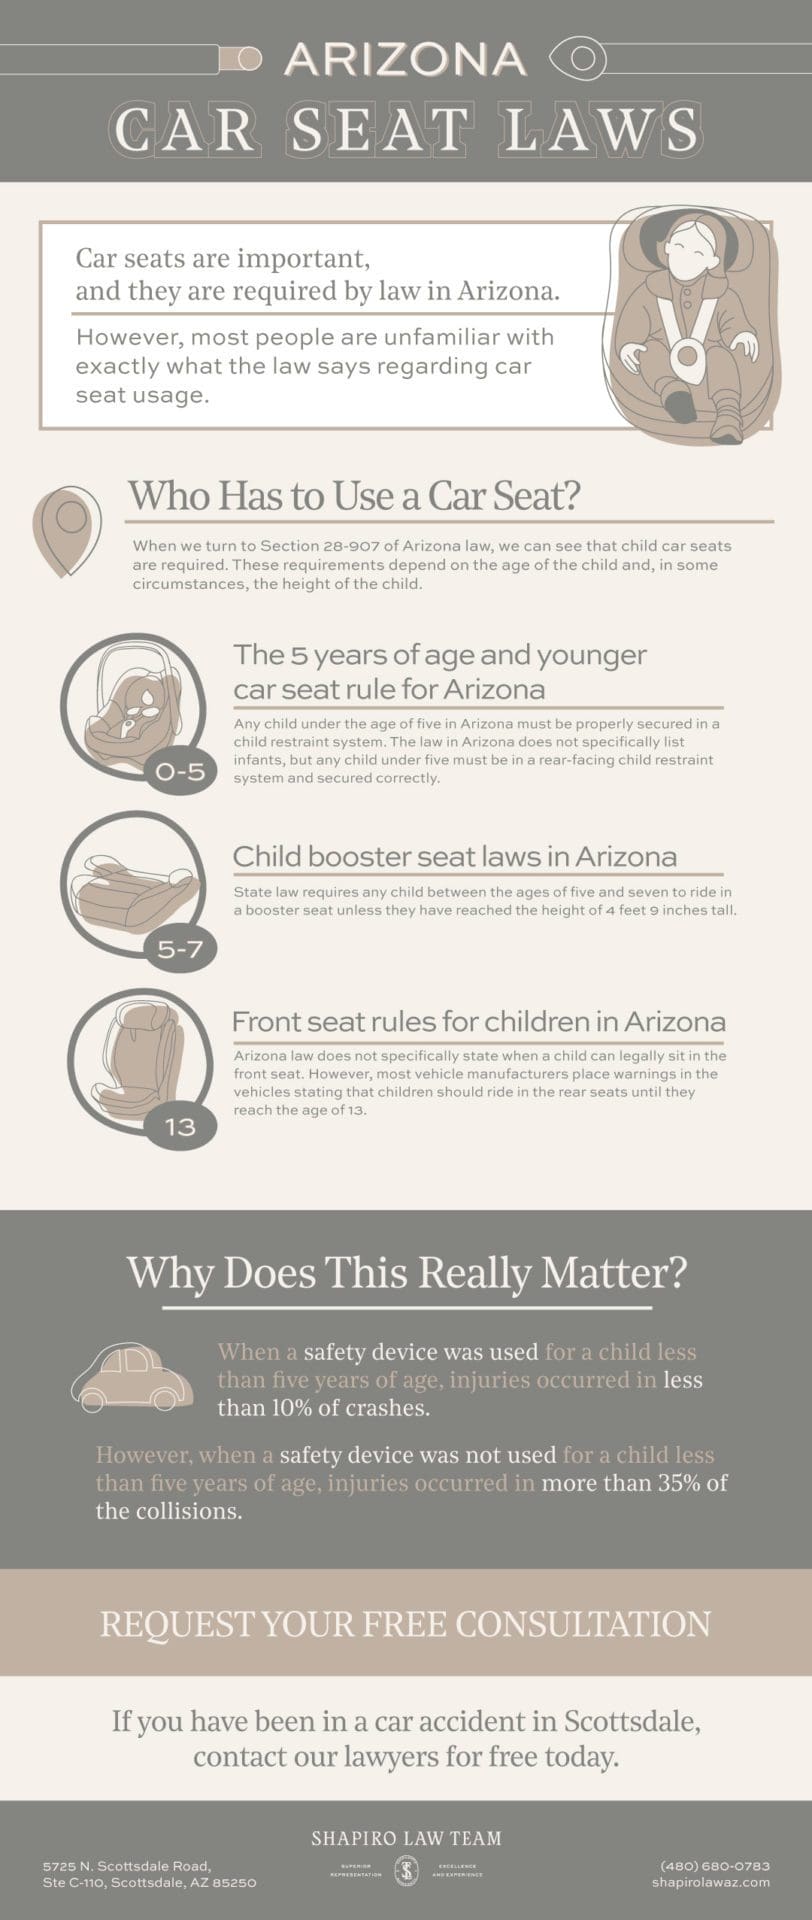 Arizona-Car-seat-laws